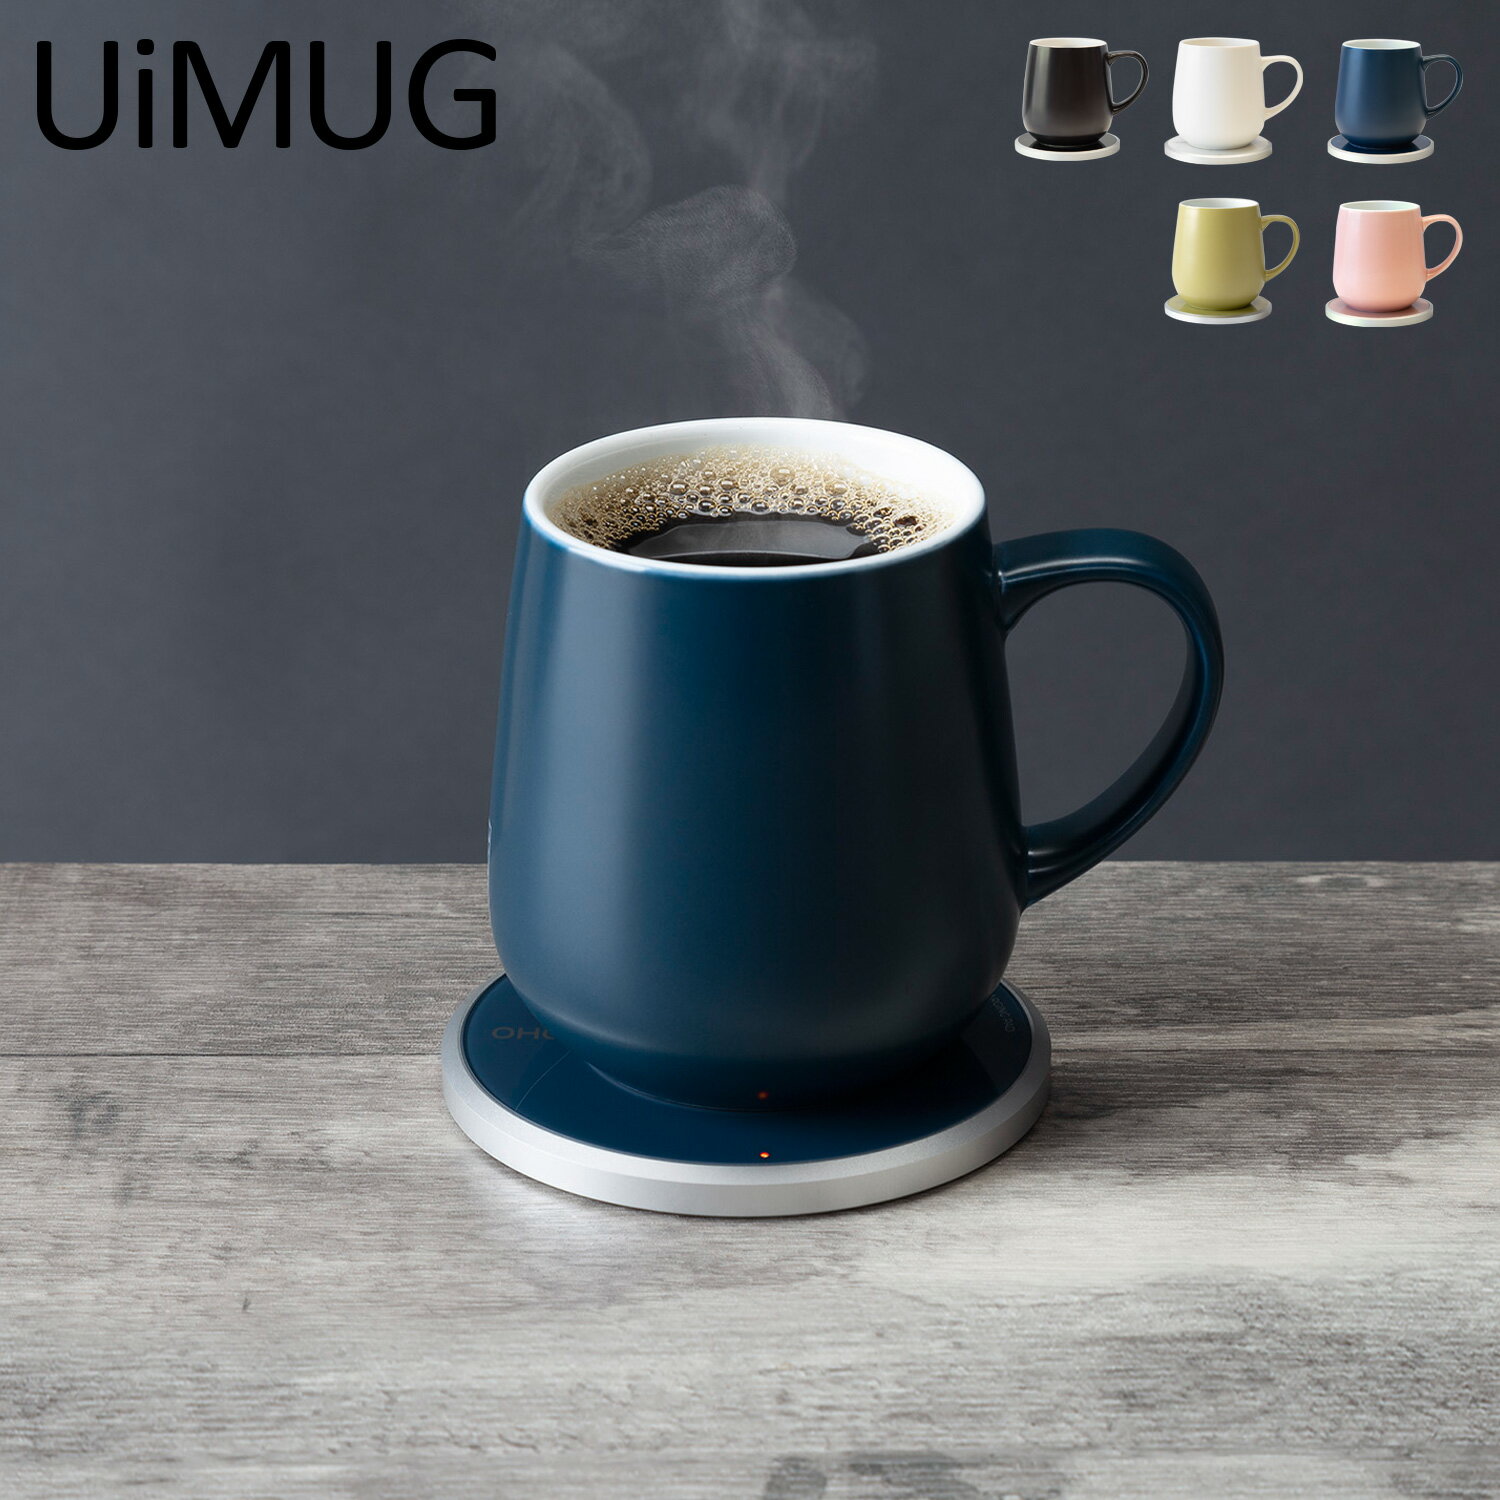 Ui Mug ウィマグ マグカップ コーヒーカップ 355ml 充電器 ワイヤレス 保温 ファインセラミック